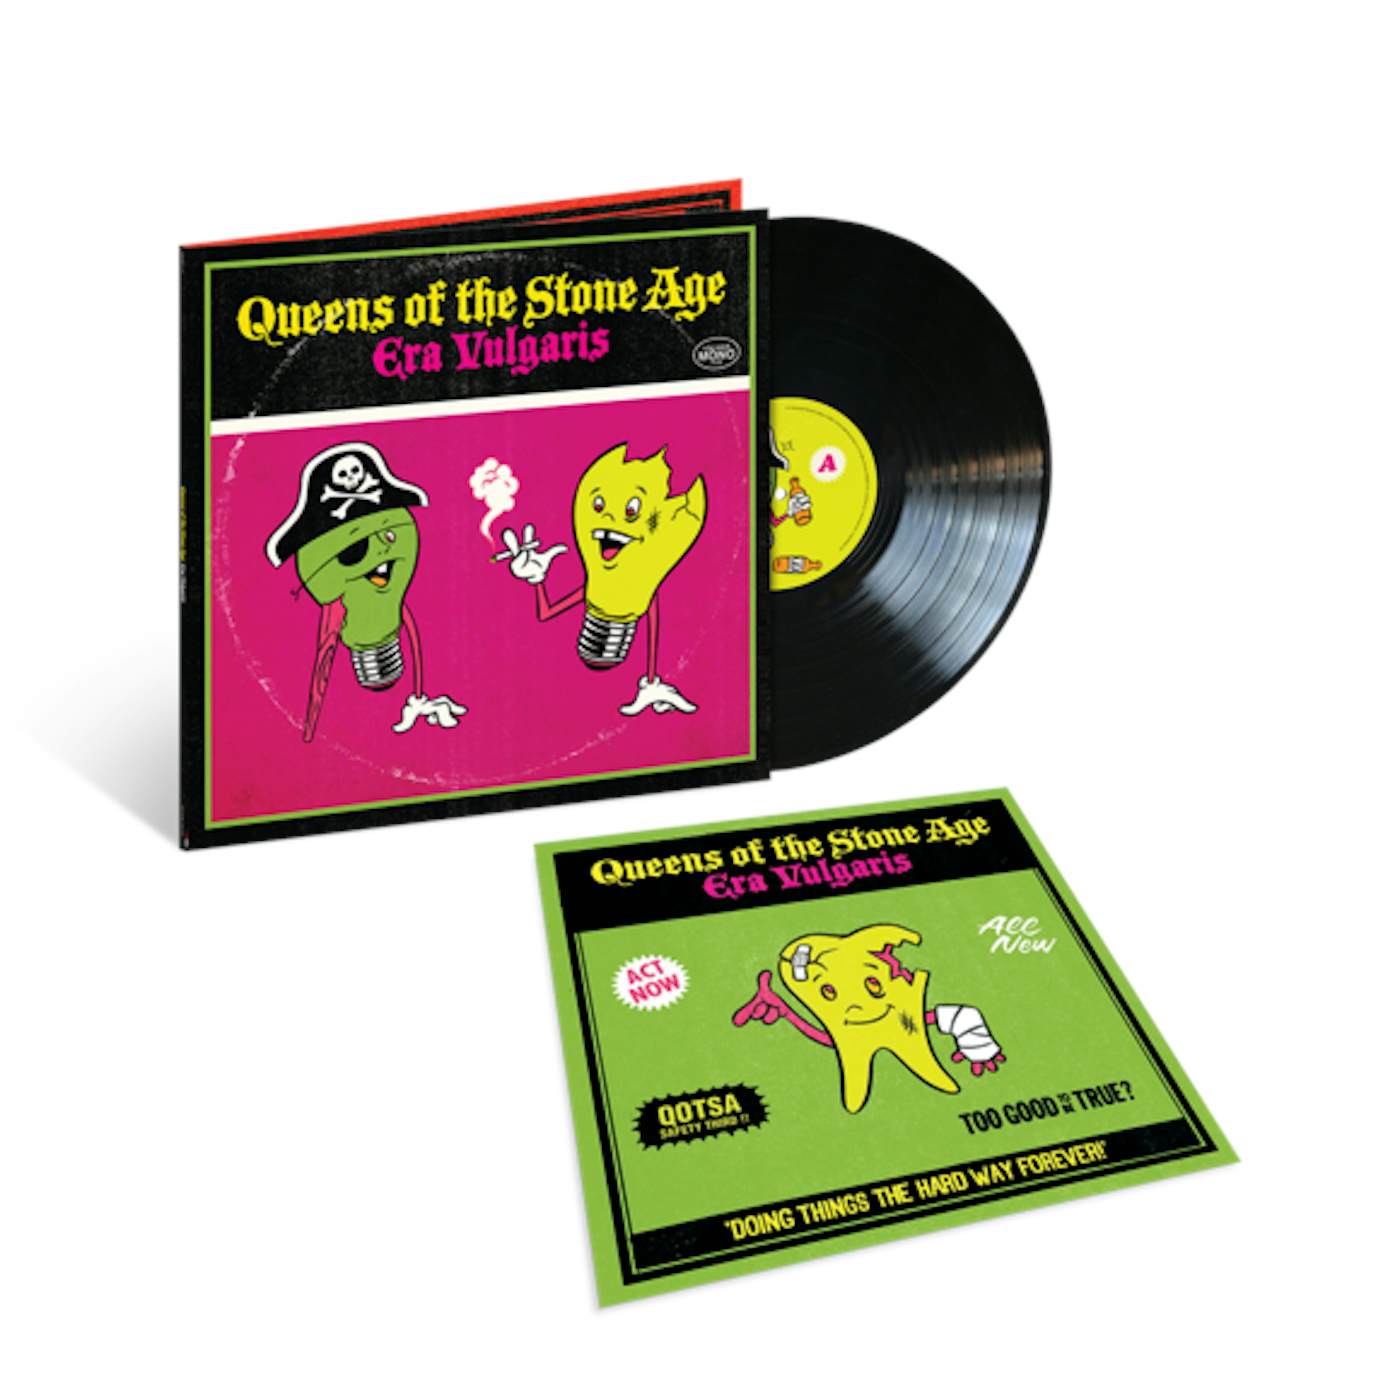 Queens of the Stone Age Era Vulgaris Vinyl Record